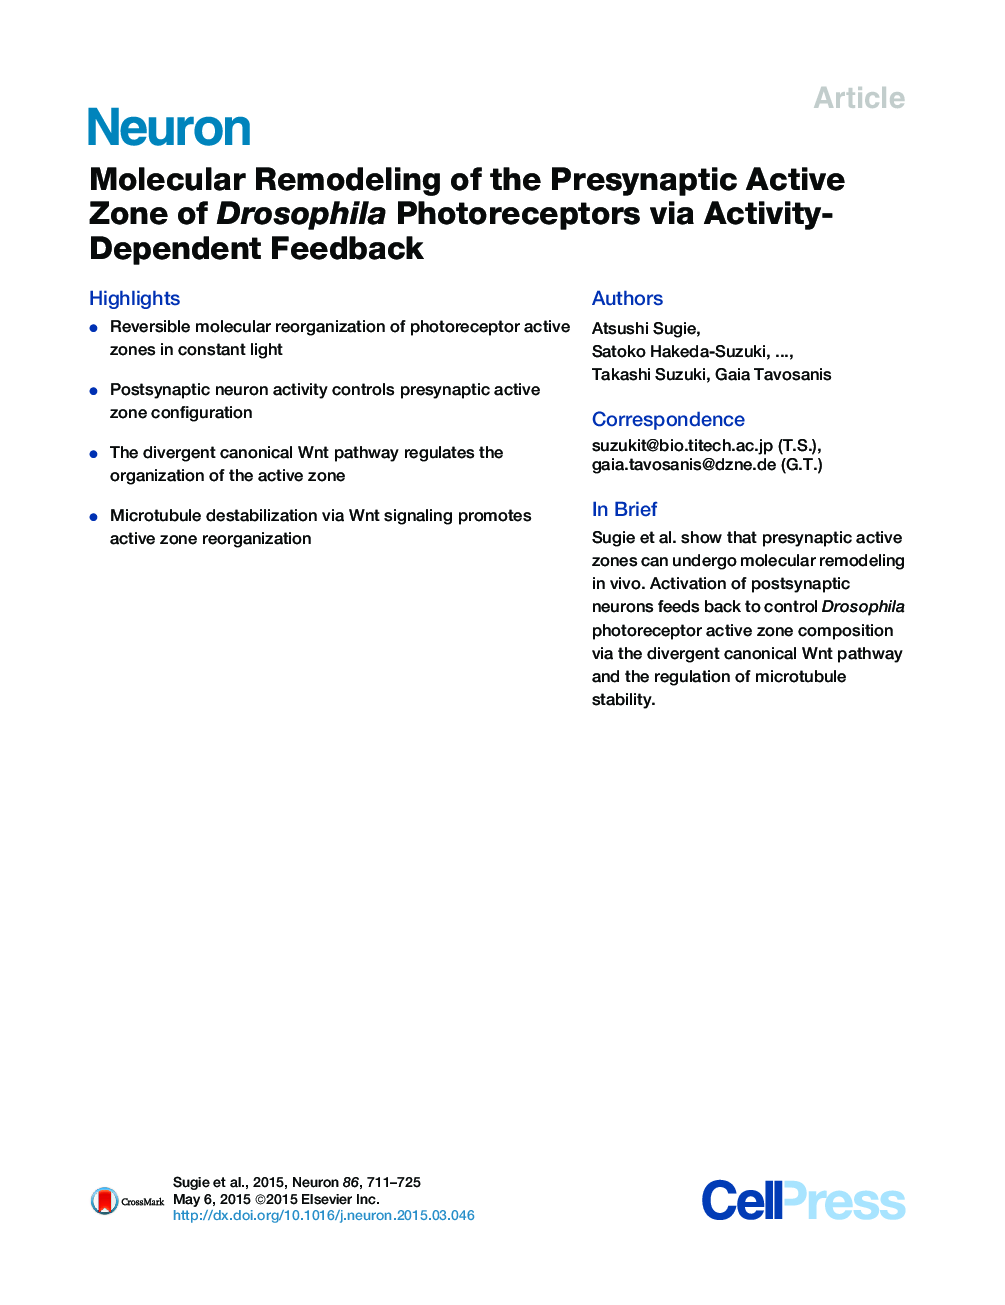 Molecular Remodeling of the Presynaptic Active Zone of Drosophila Photoreceptors via Activity-Dependent Feedback